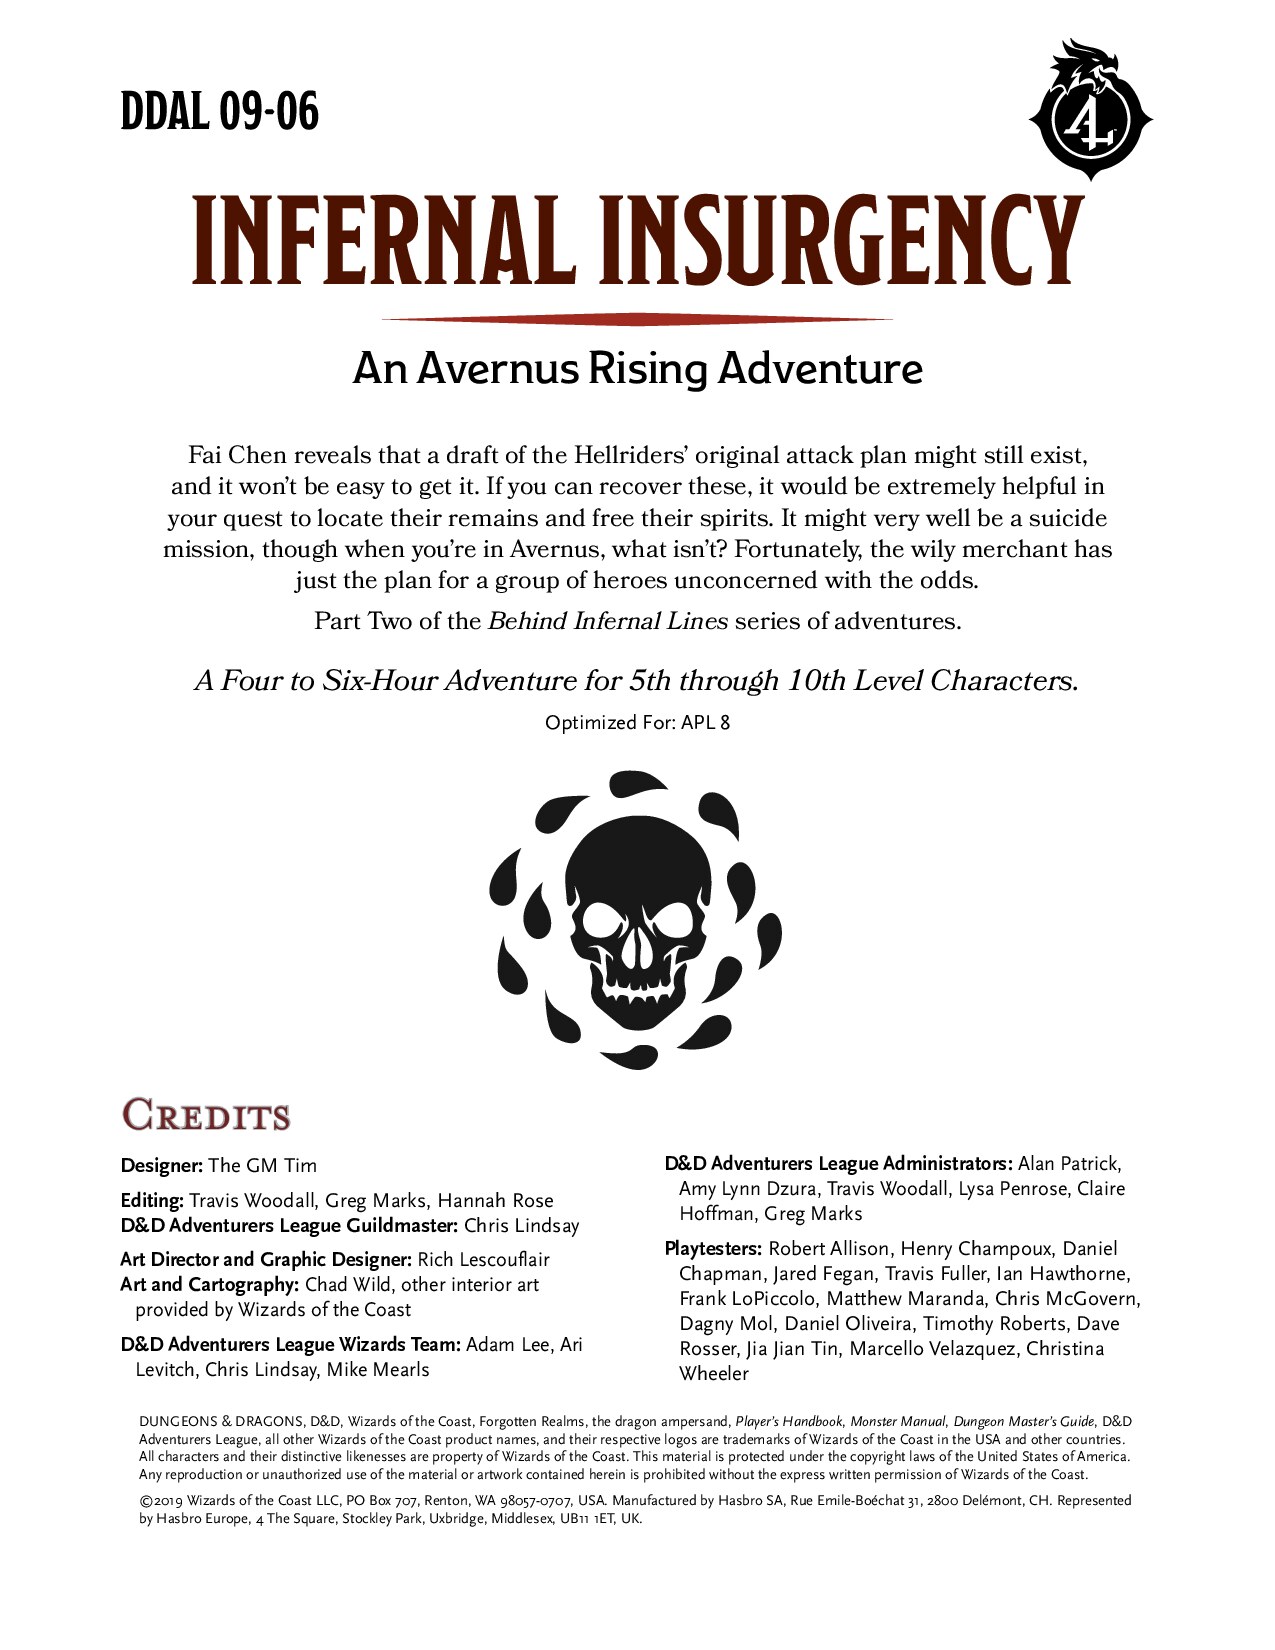 DDAL09-06 - Infernal Insurgency